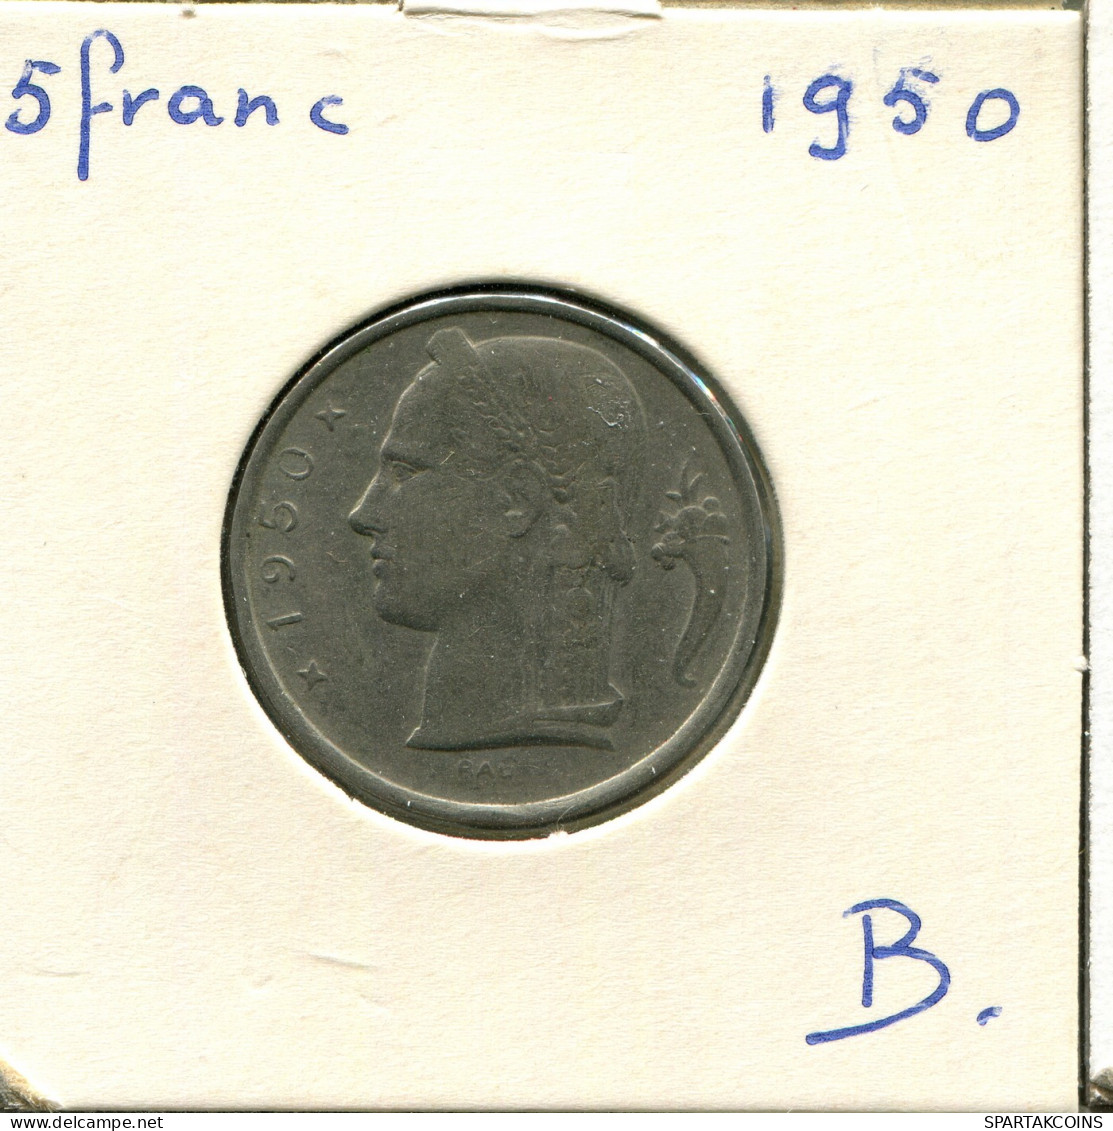 5 FRANCS 1950 DUTCH Text BELGIUM Coin #AW878.U - 5 Franc